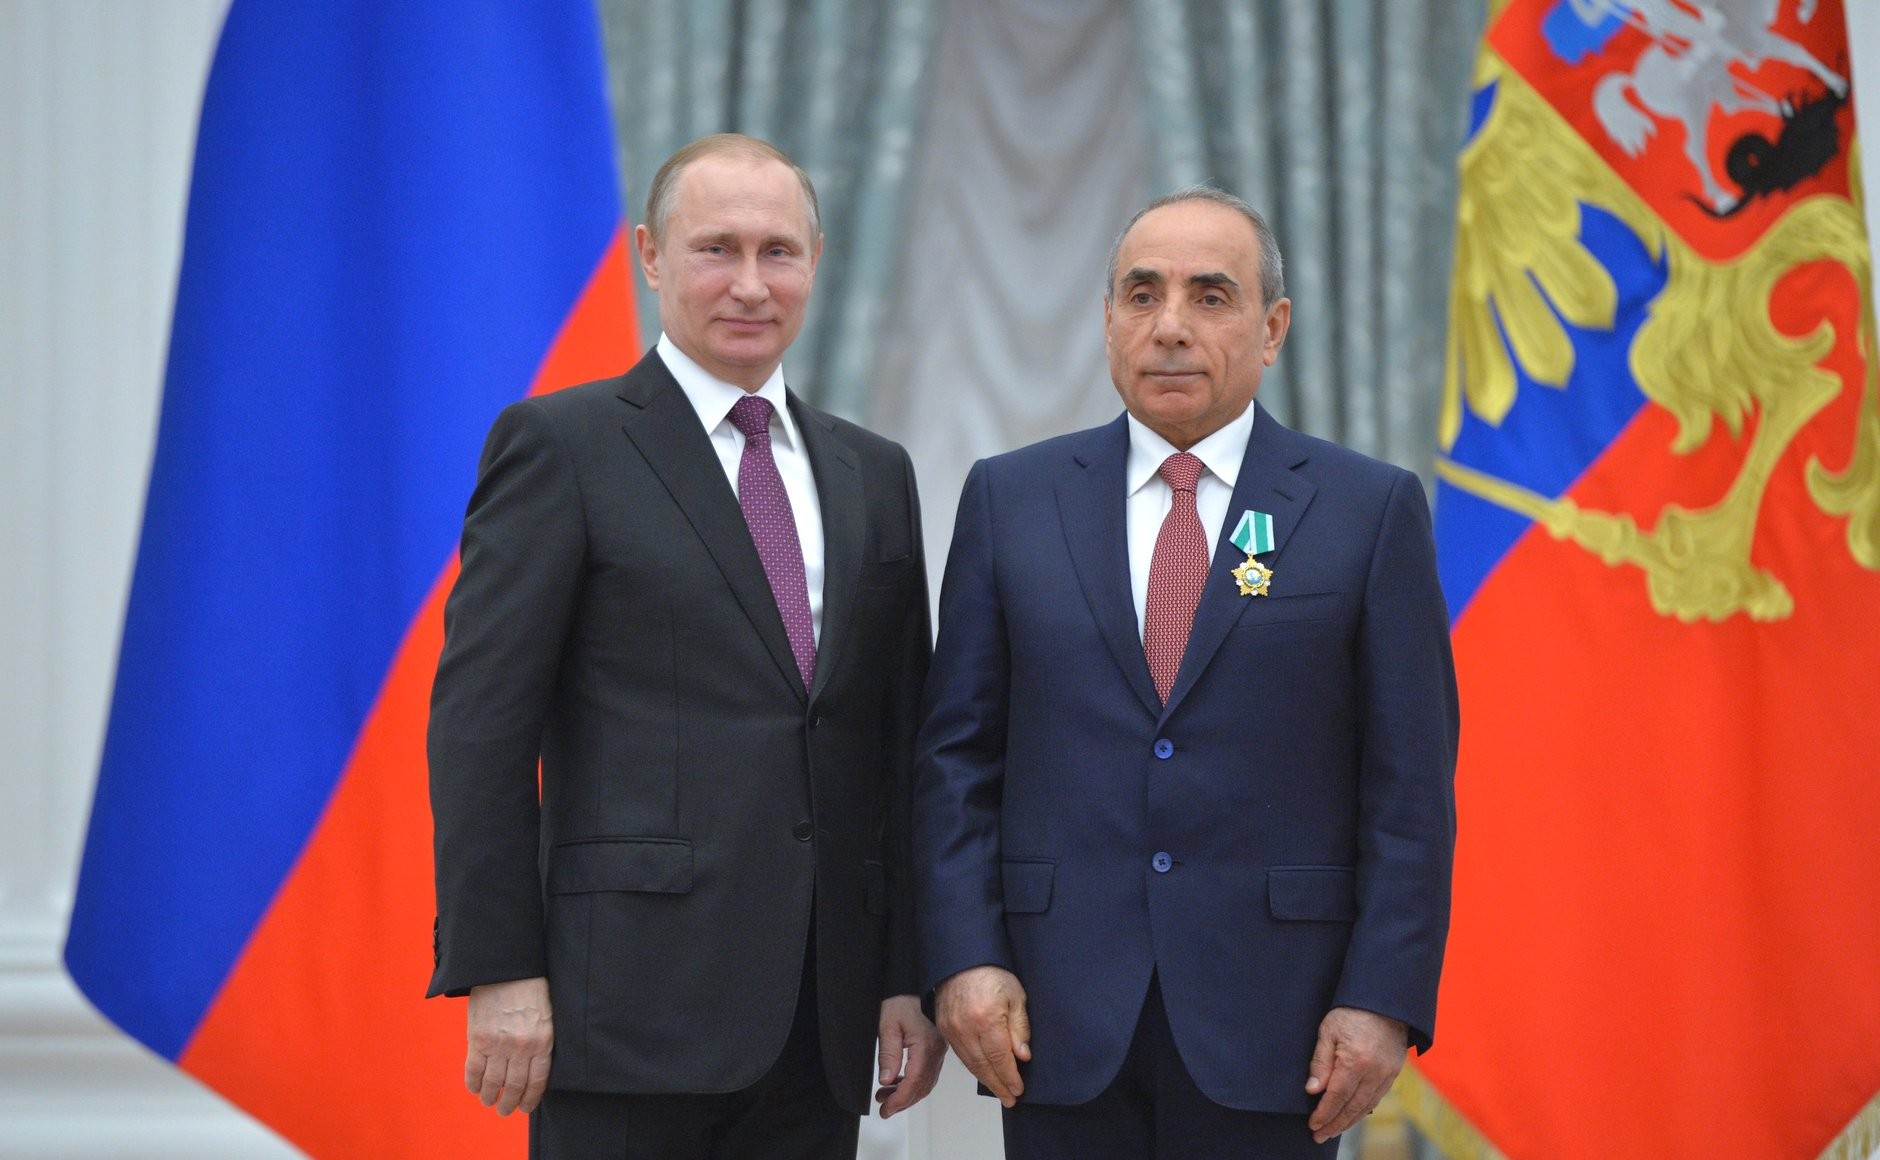 Credit: Yaqub Eyyubov is awarded the Order of Friendship by Russian President Vladimir Putin in March 2016. (Photo credit: Kremlin.ru)